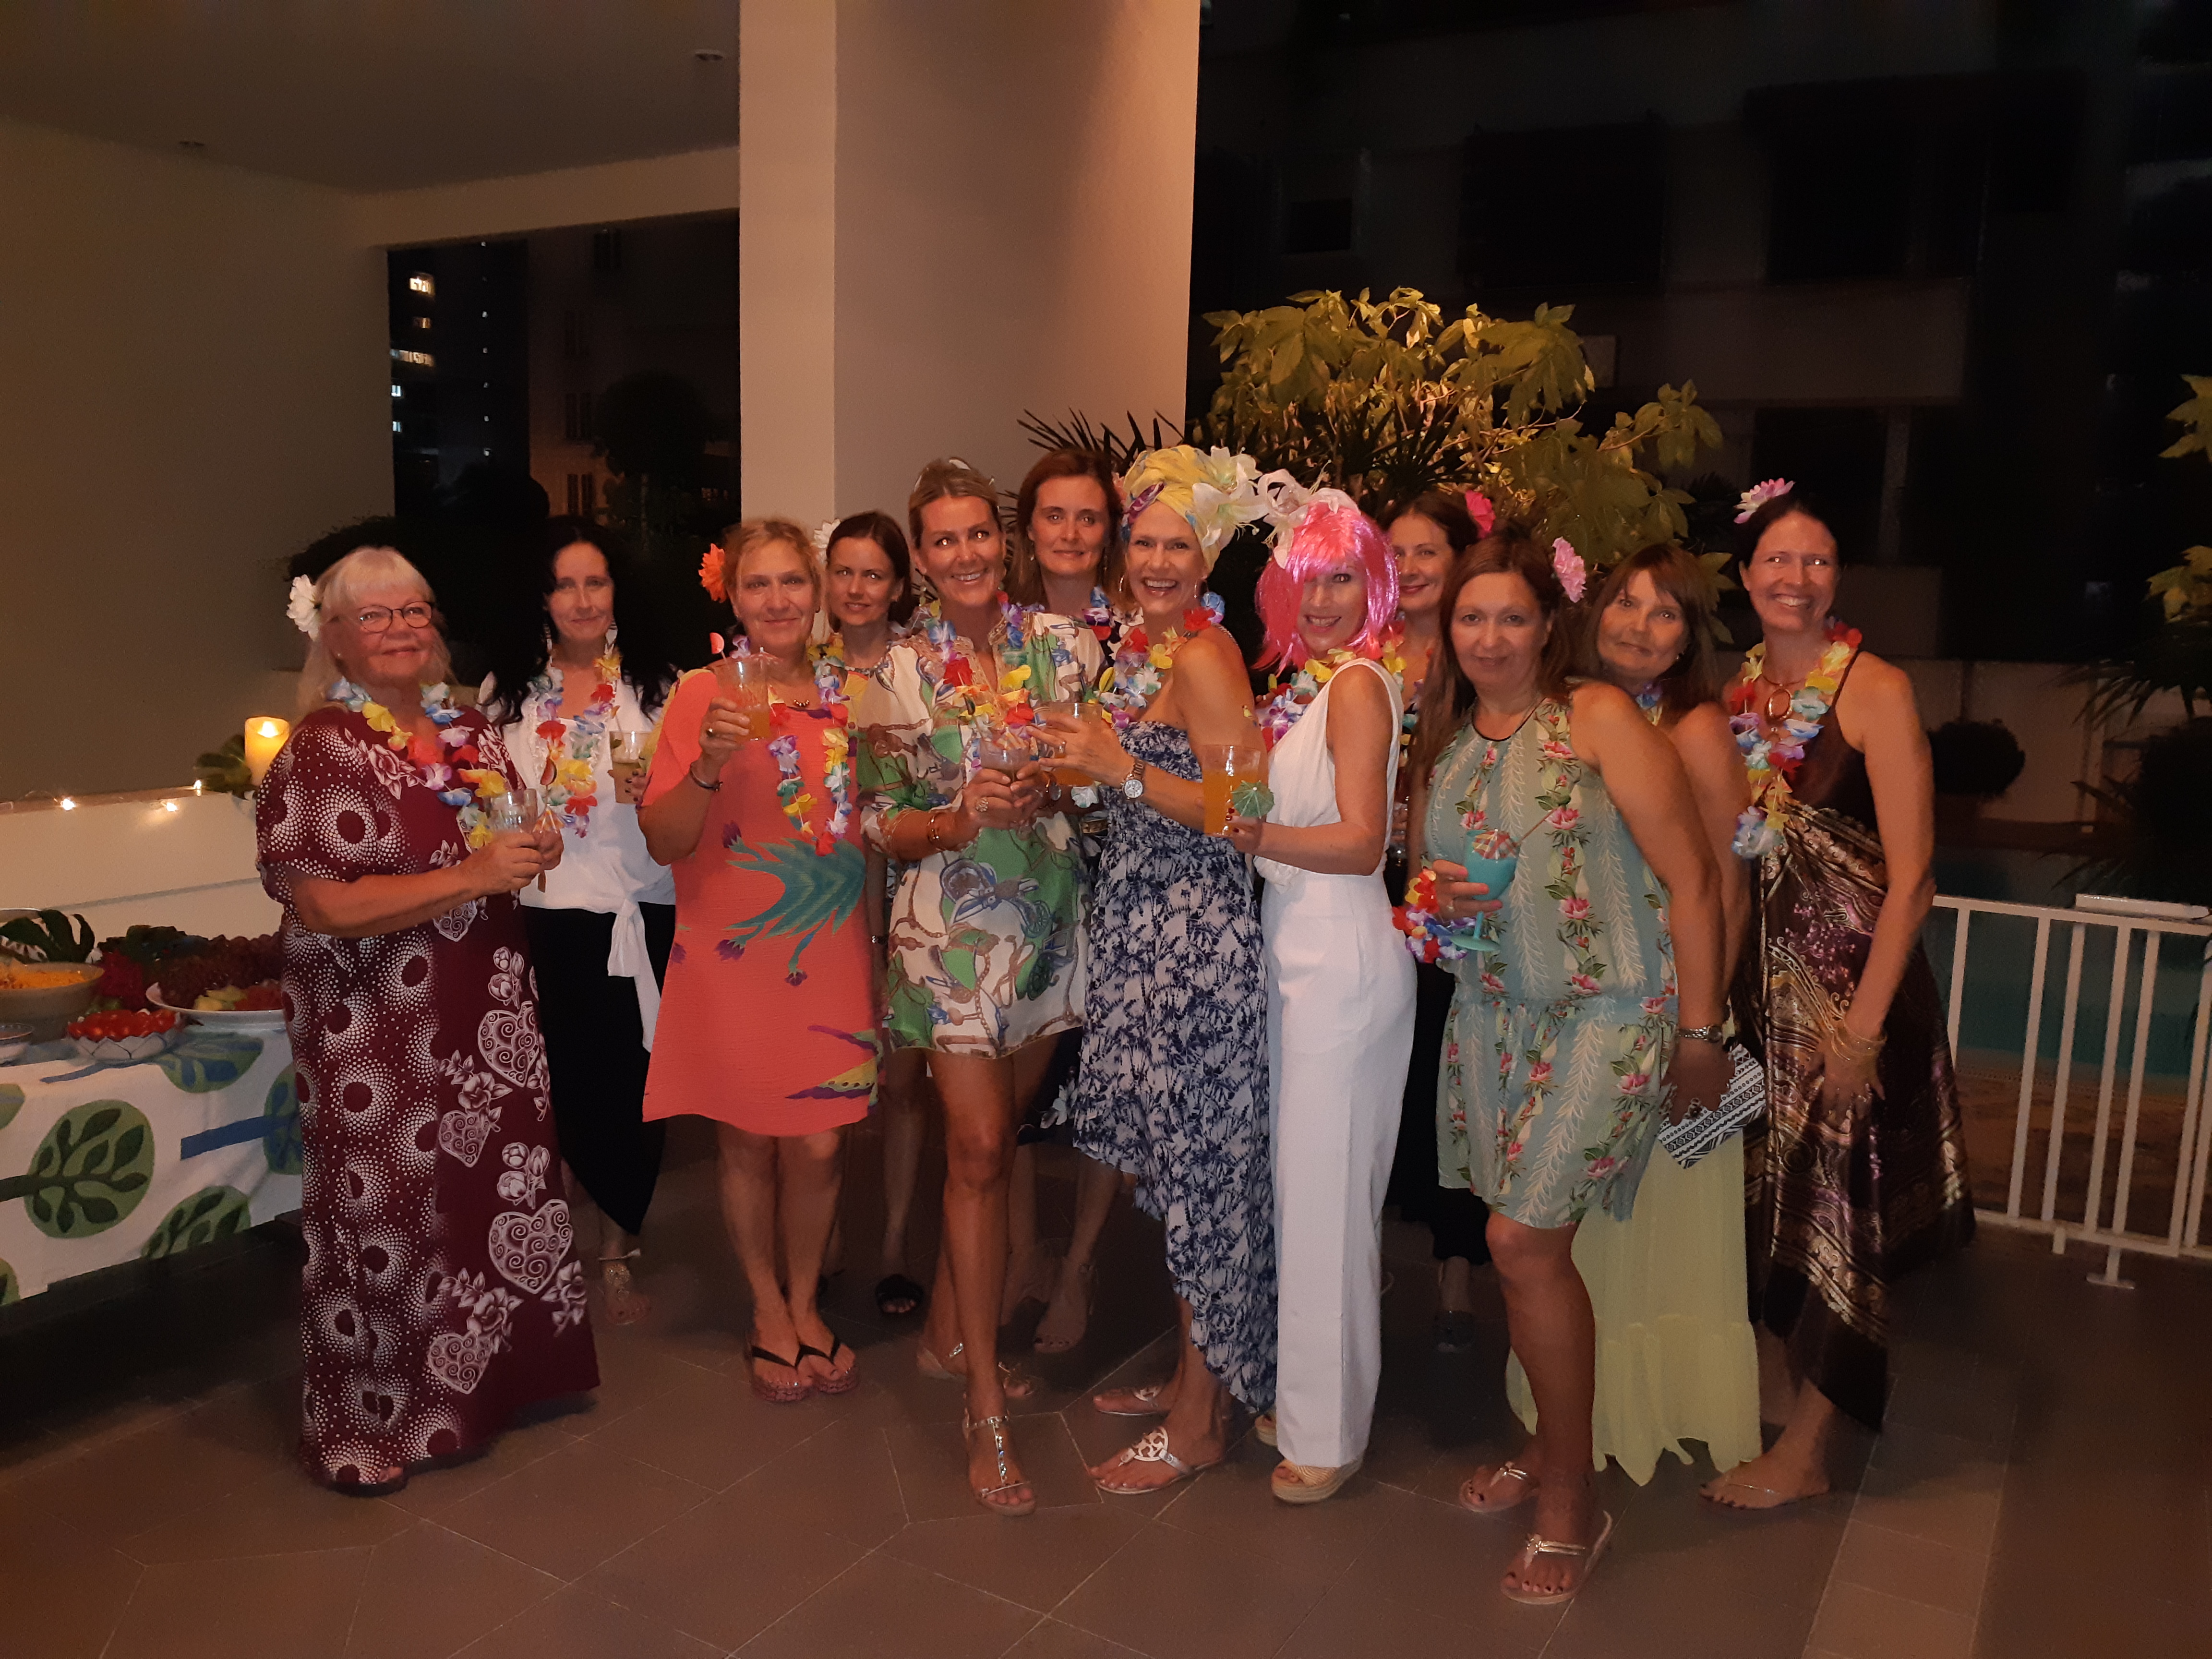 SWEA (Swedish Women Educational Association) goes Caribbean...